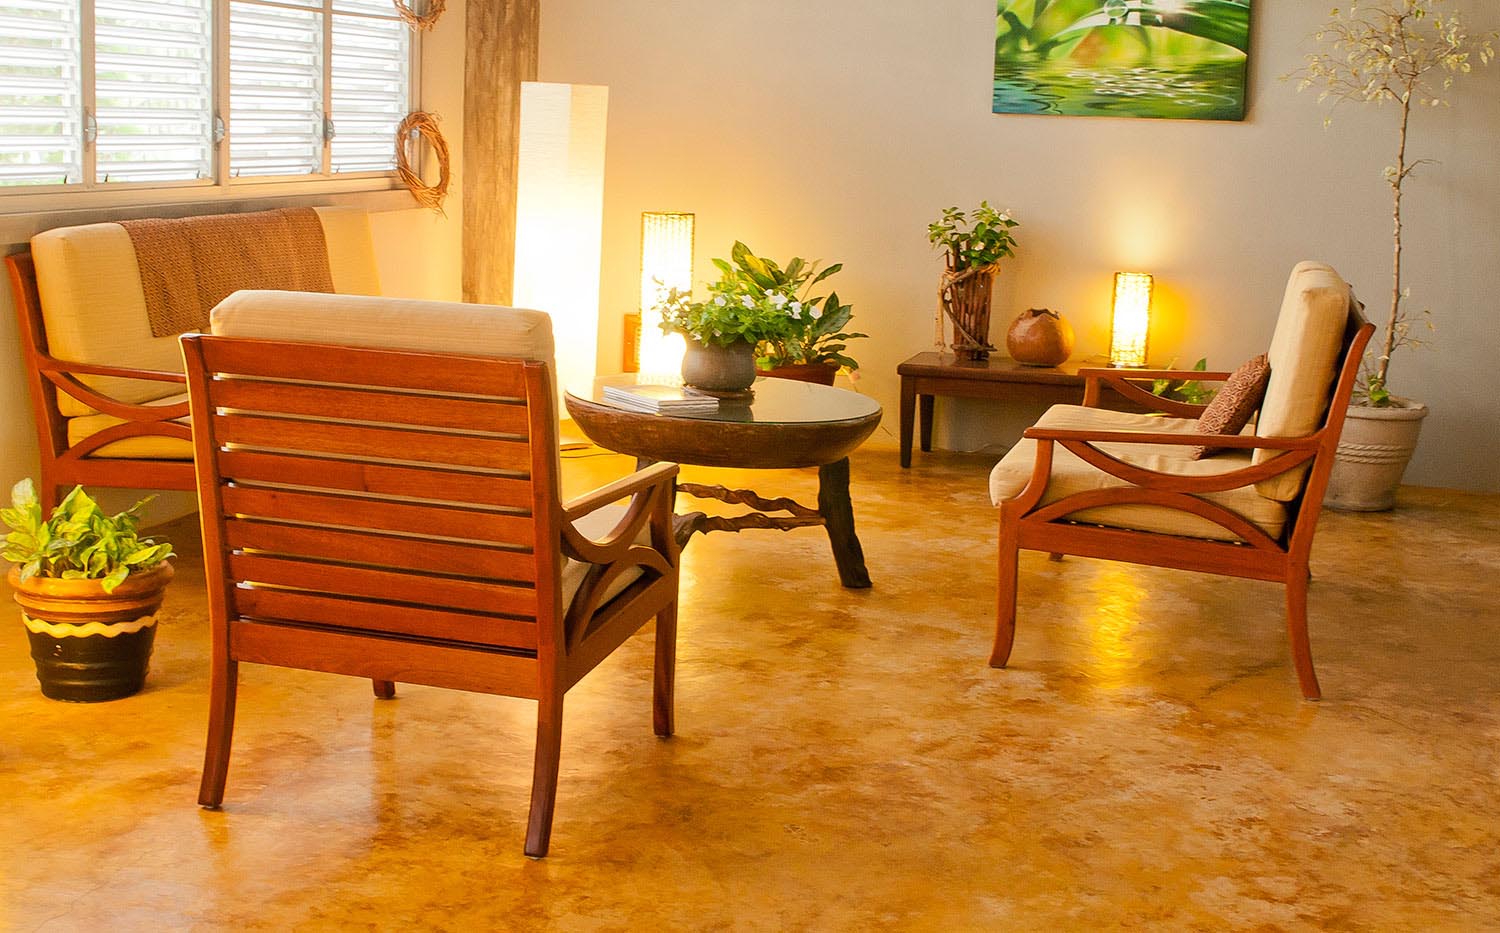 Mahogany lounge chairs with cushions